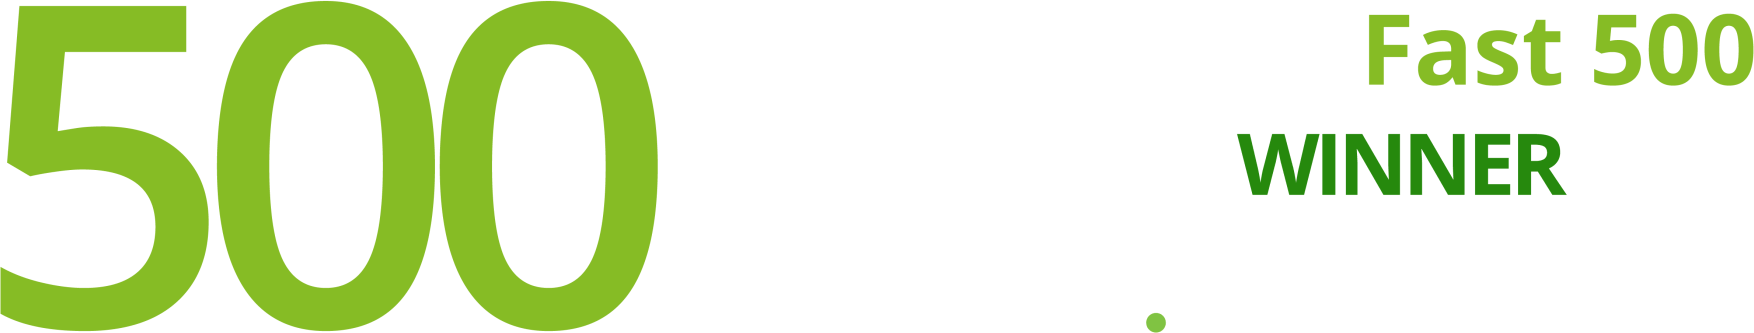 Nestor has been named an EMEA Technology Fast 500 Winner by Deloitte<br />
